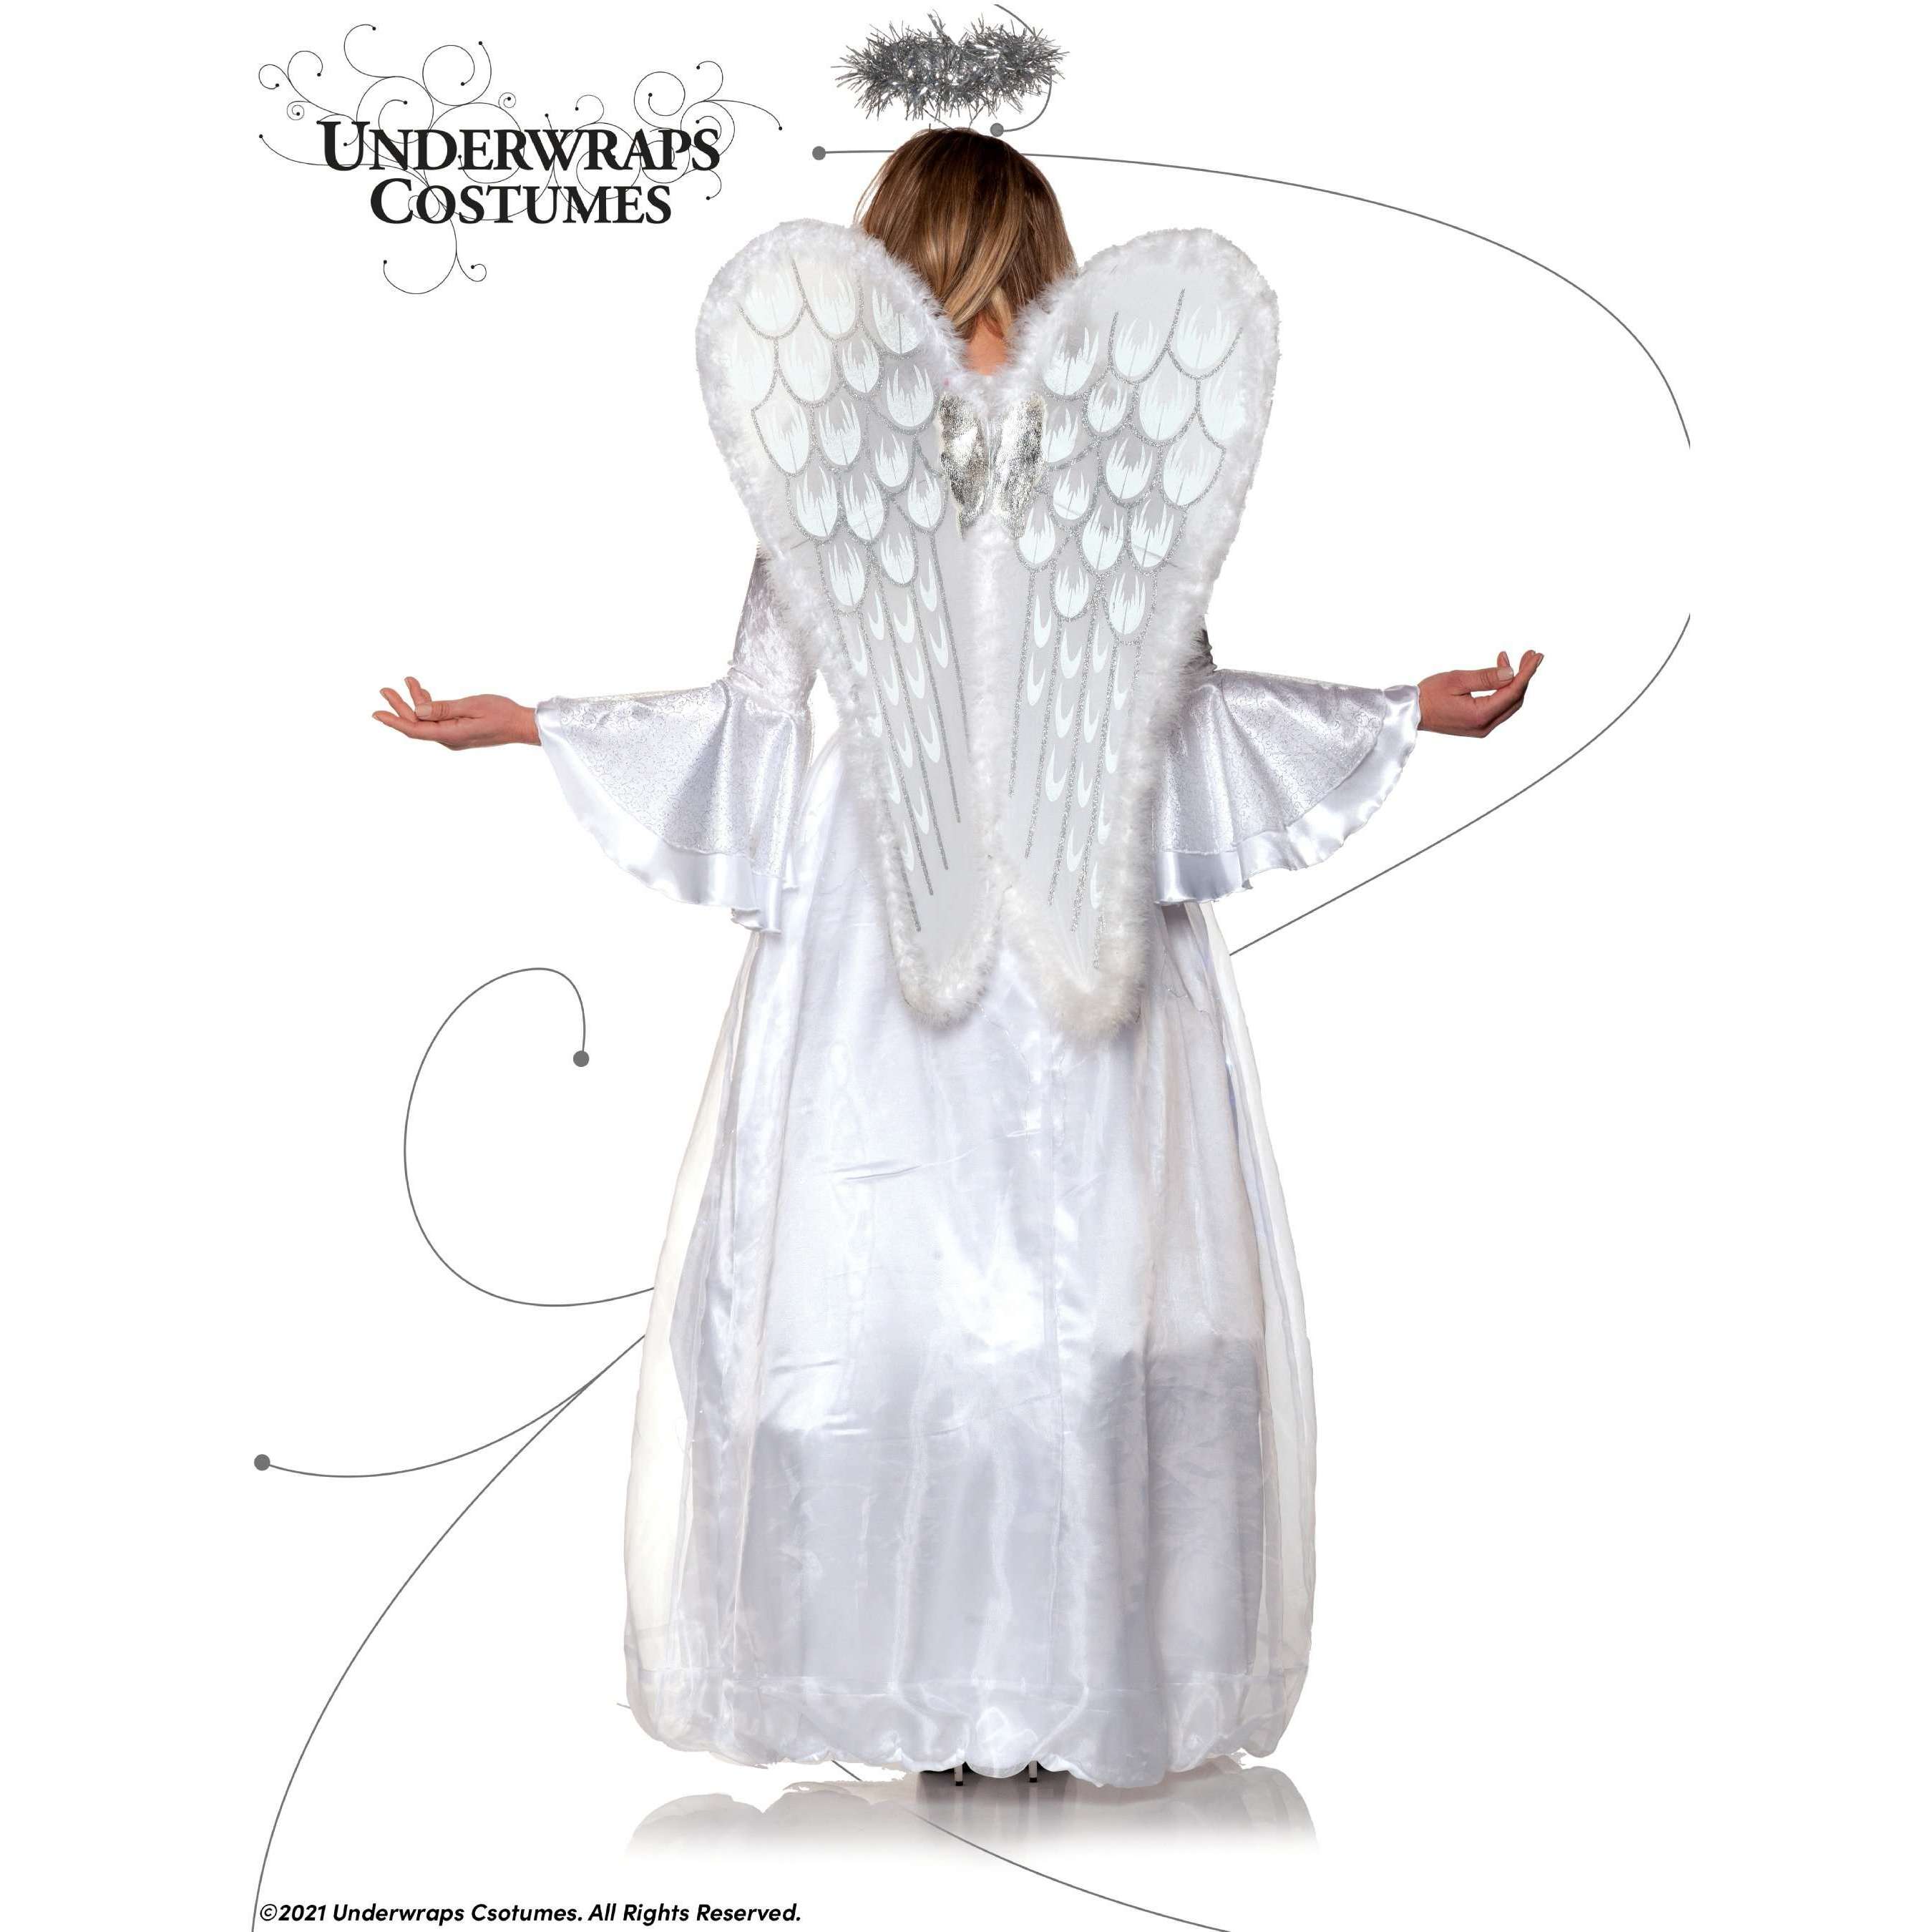 Heavenly White Angel Light Up Dress Women's Adult Costume w/ Wings & Halo